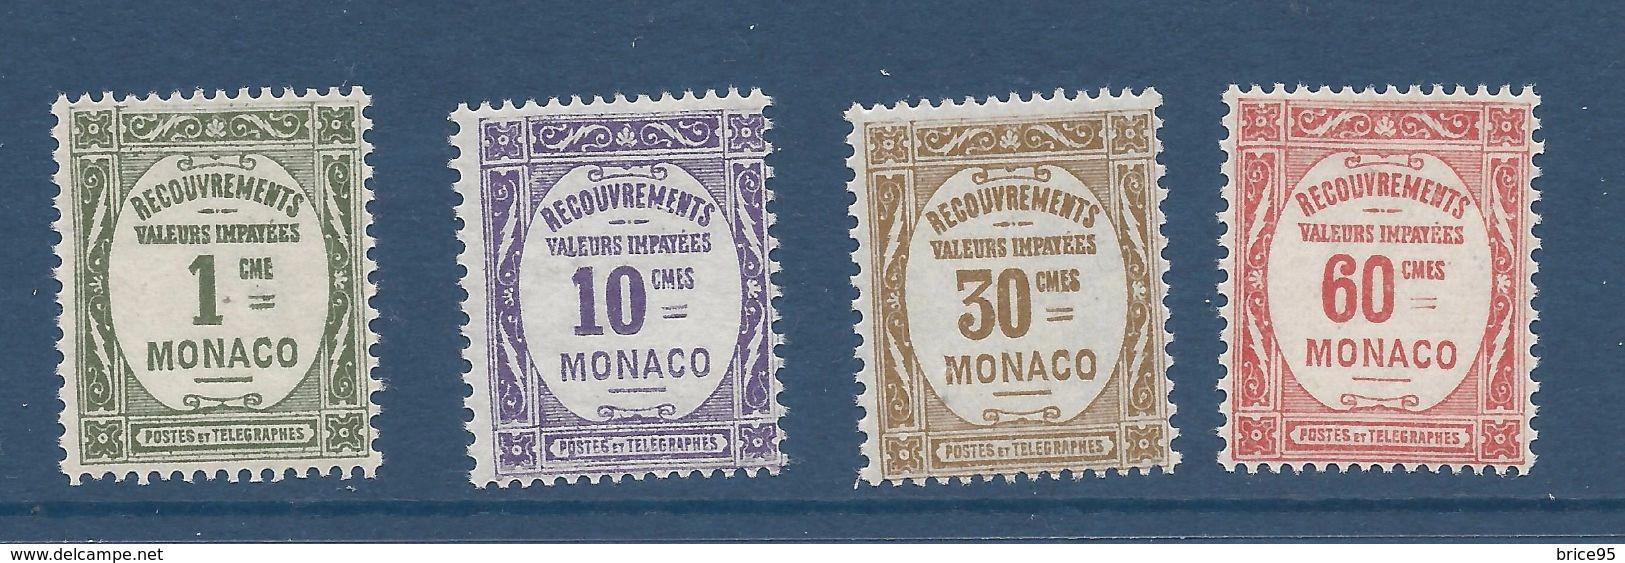 Monaco Taxe - YT N° 13 à 16 * - Neuf Avec Charnière - 1924 à 1932 - Ungebraucht